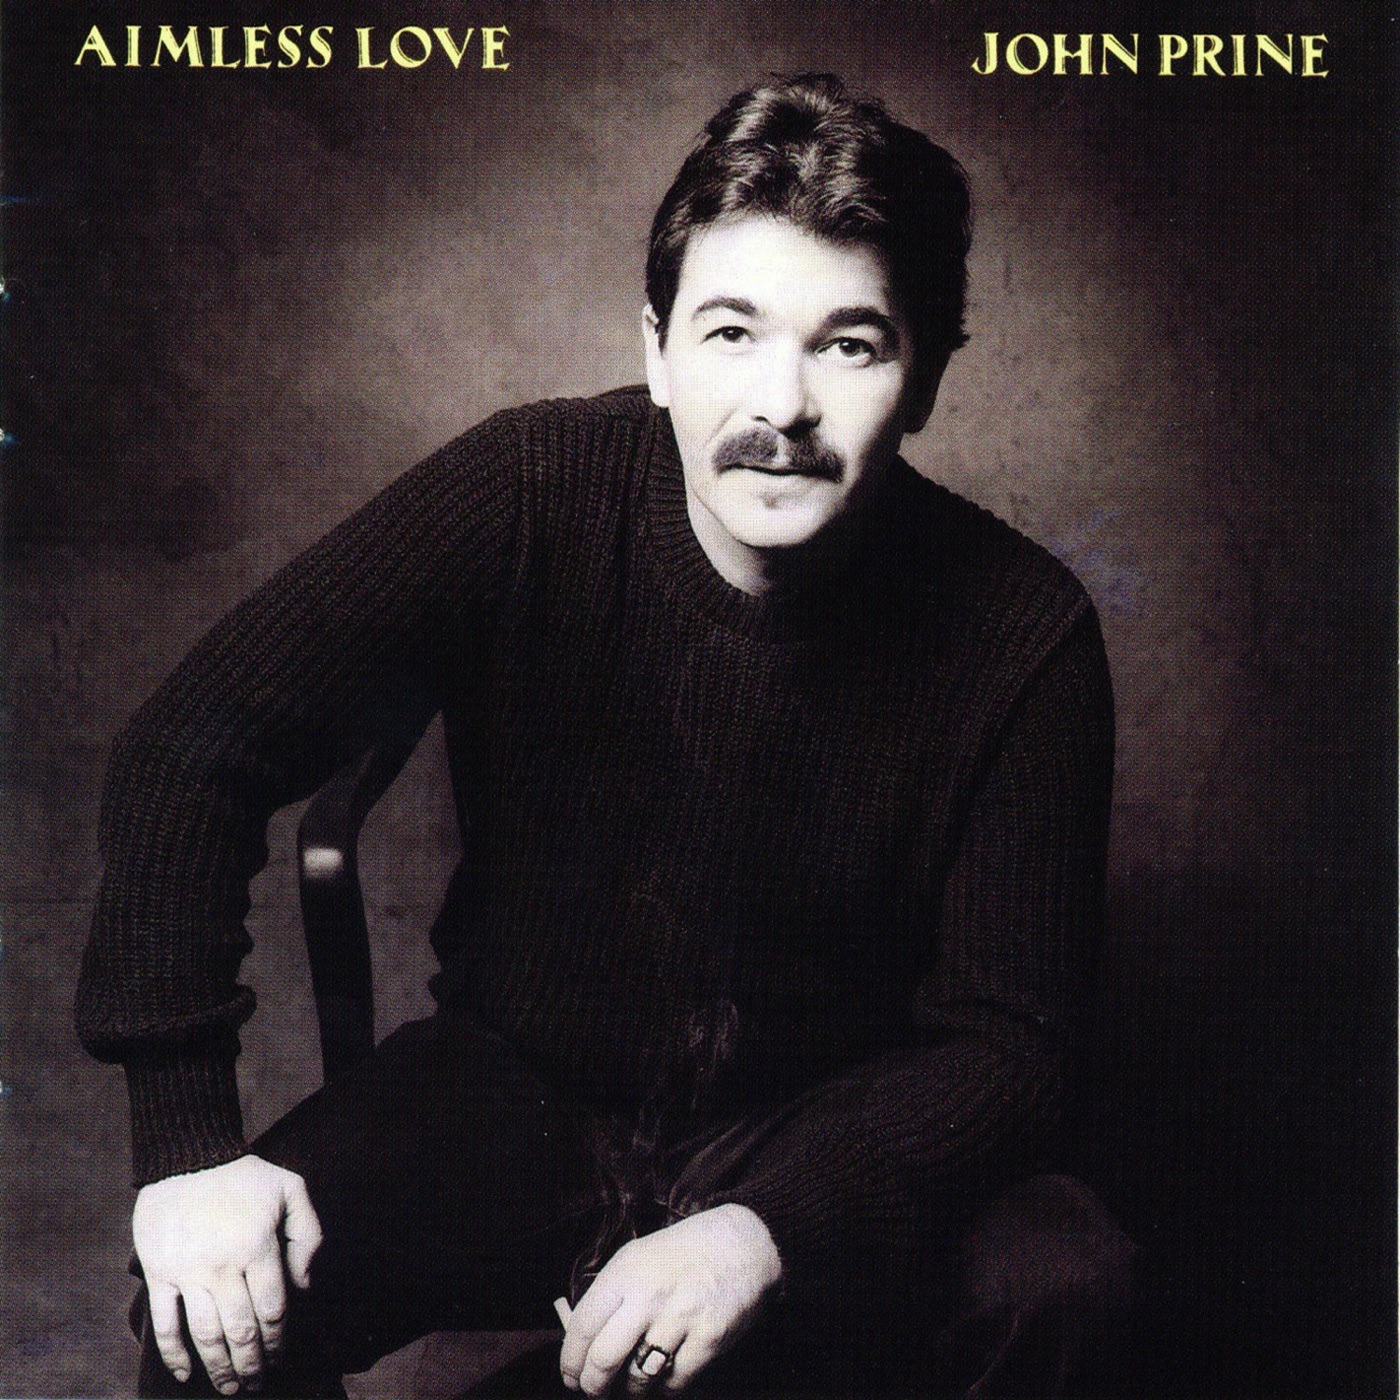 Aimless Love by John Prine